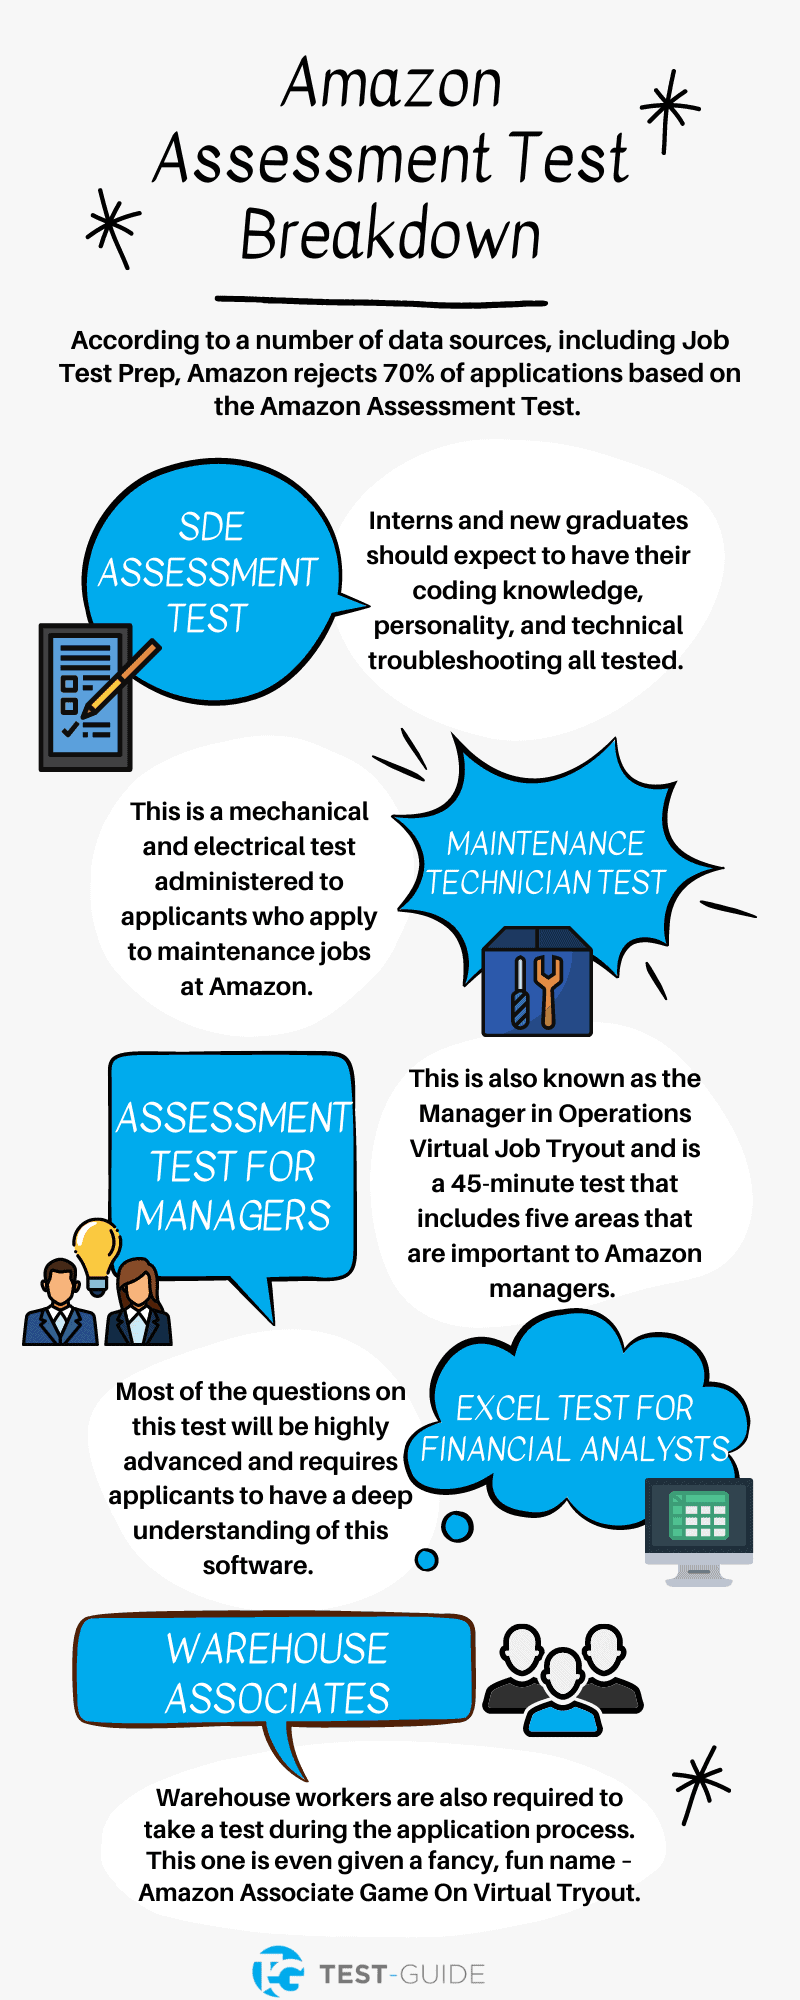 Breakdown of the Amazon Assessment Test